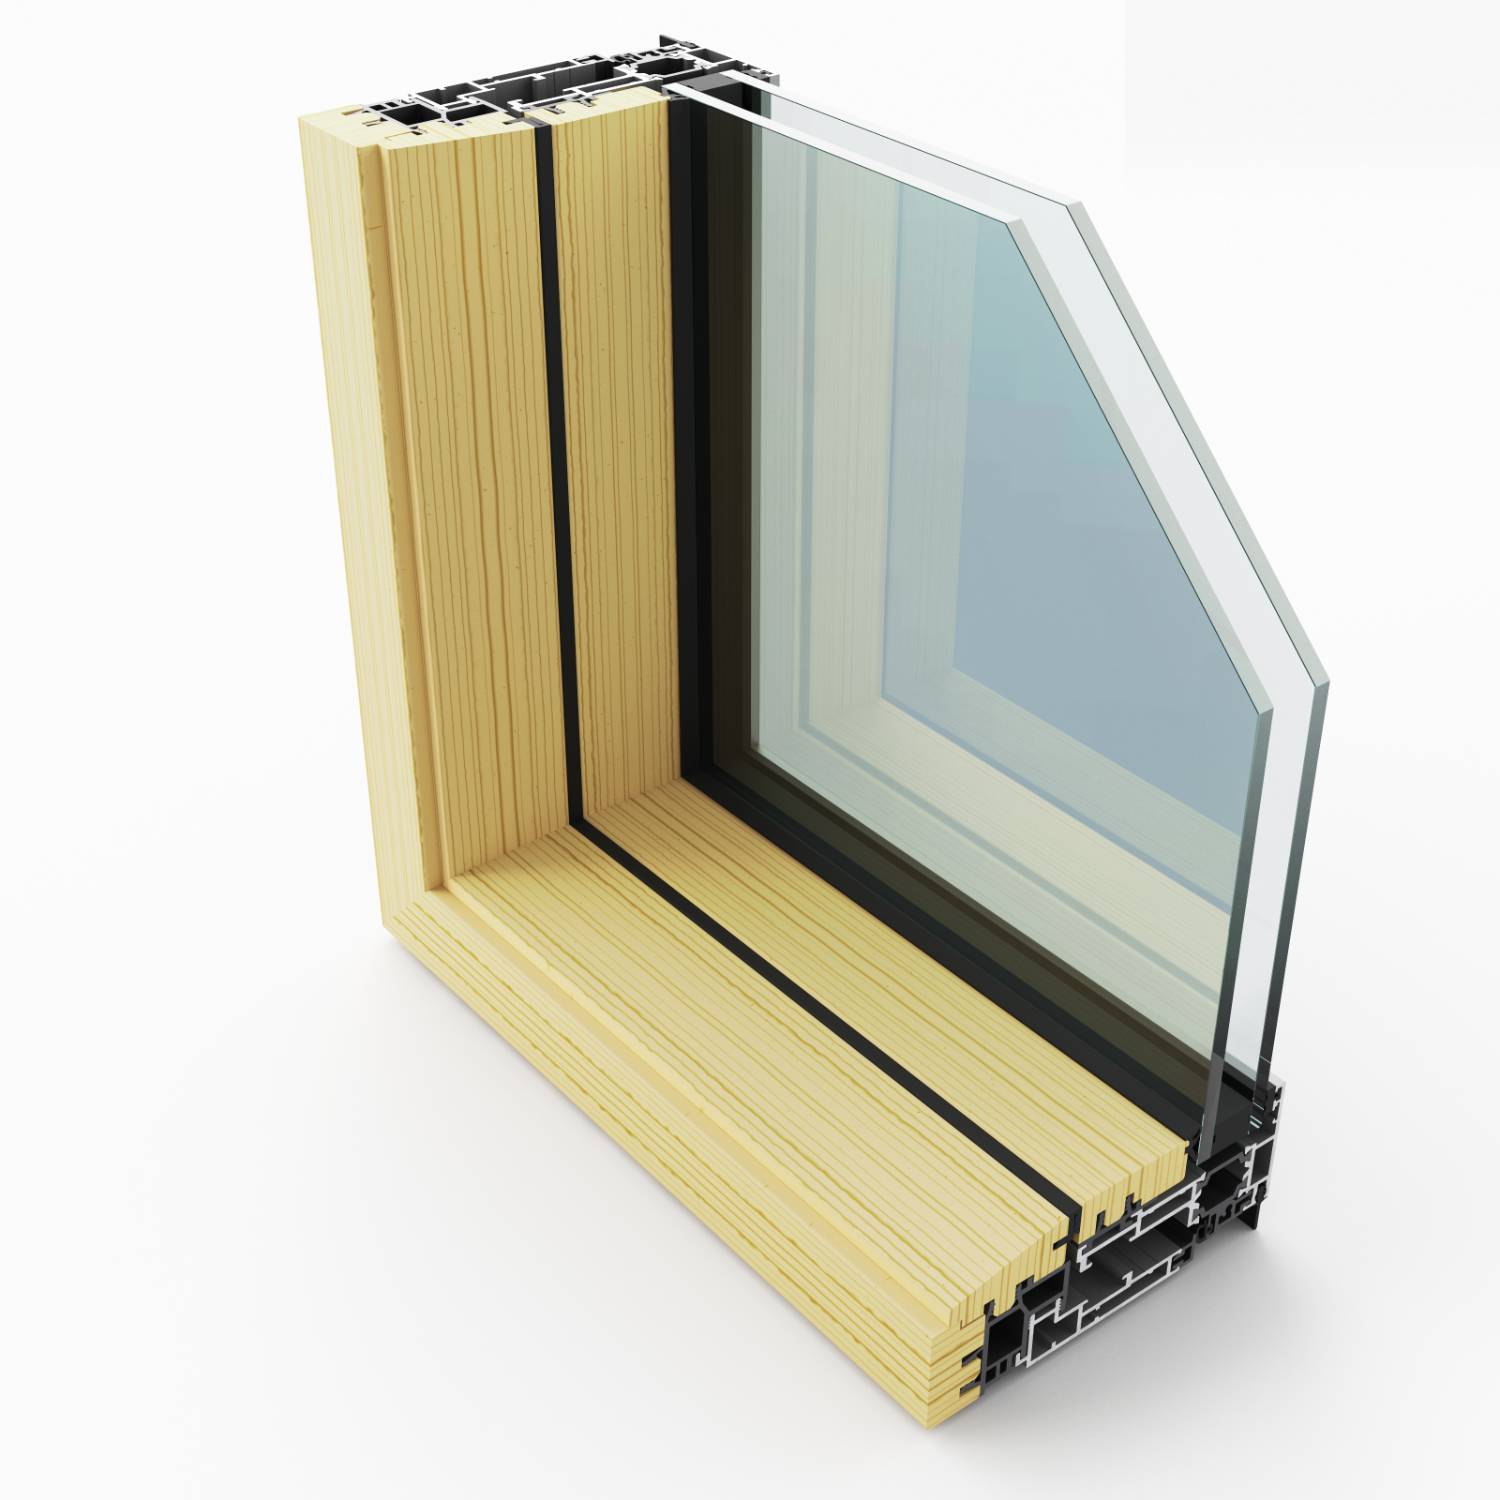 Hybrid Series 2 Casement Window System